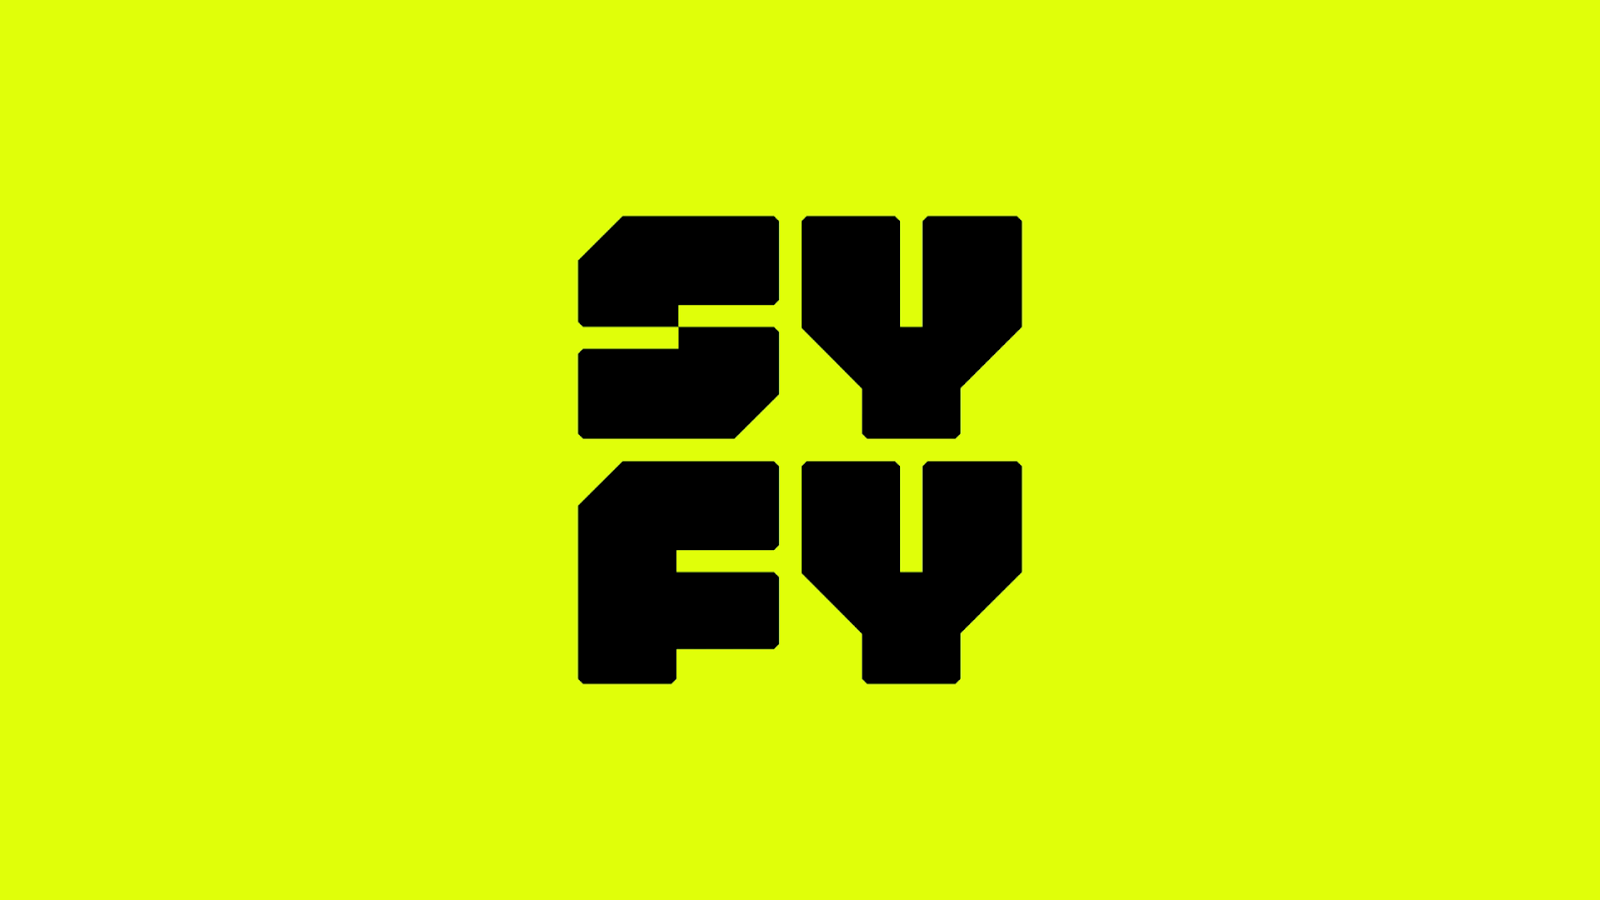 Syfy Logo - The Branding Source: Loyalkaspar gives Syfy an editorial redesign